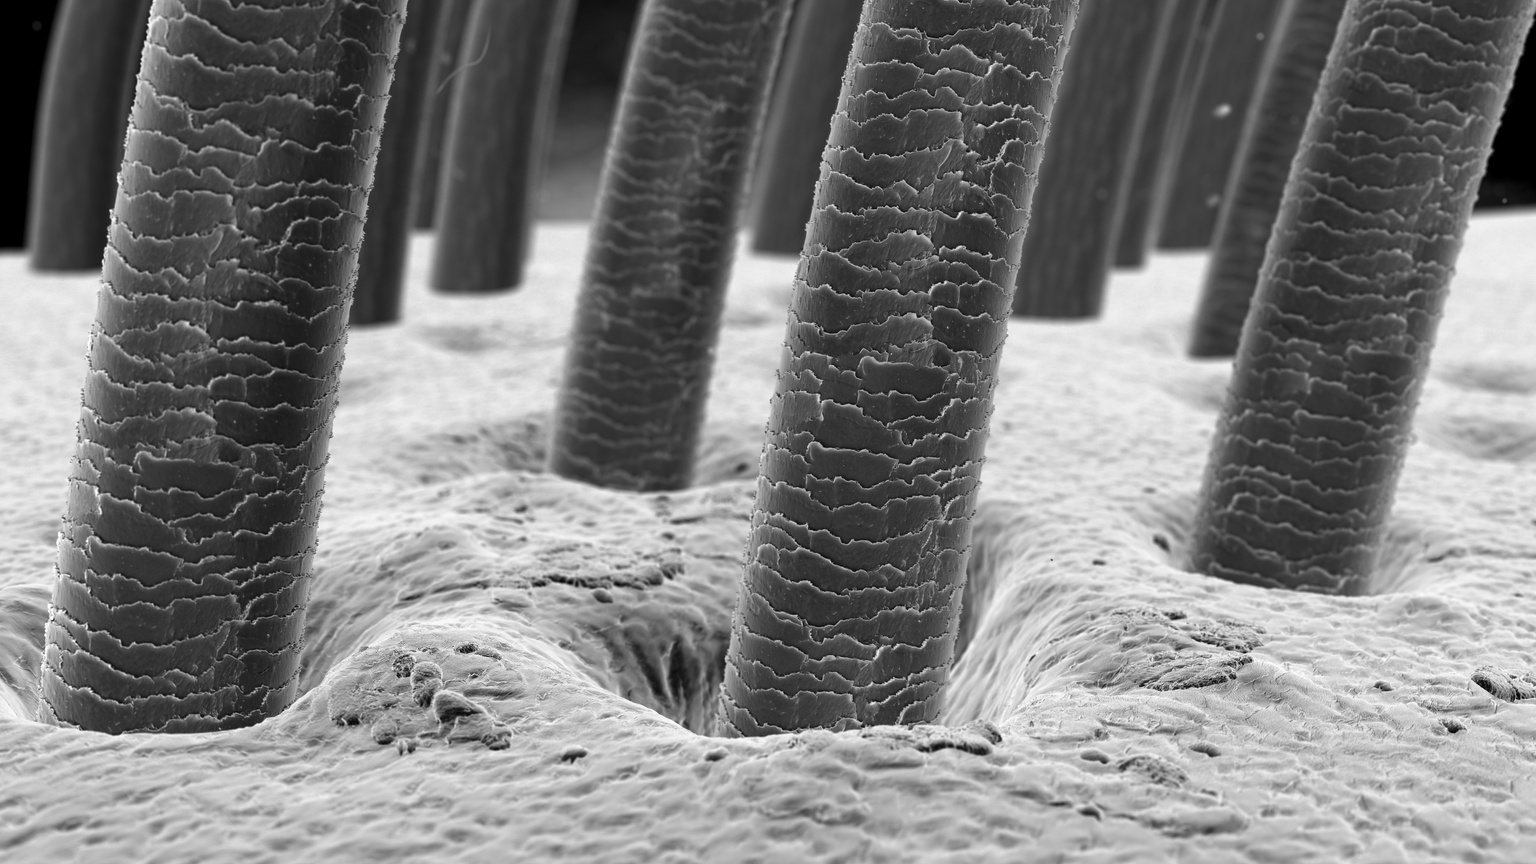 Hair under microscope